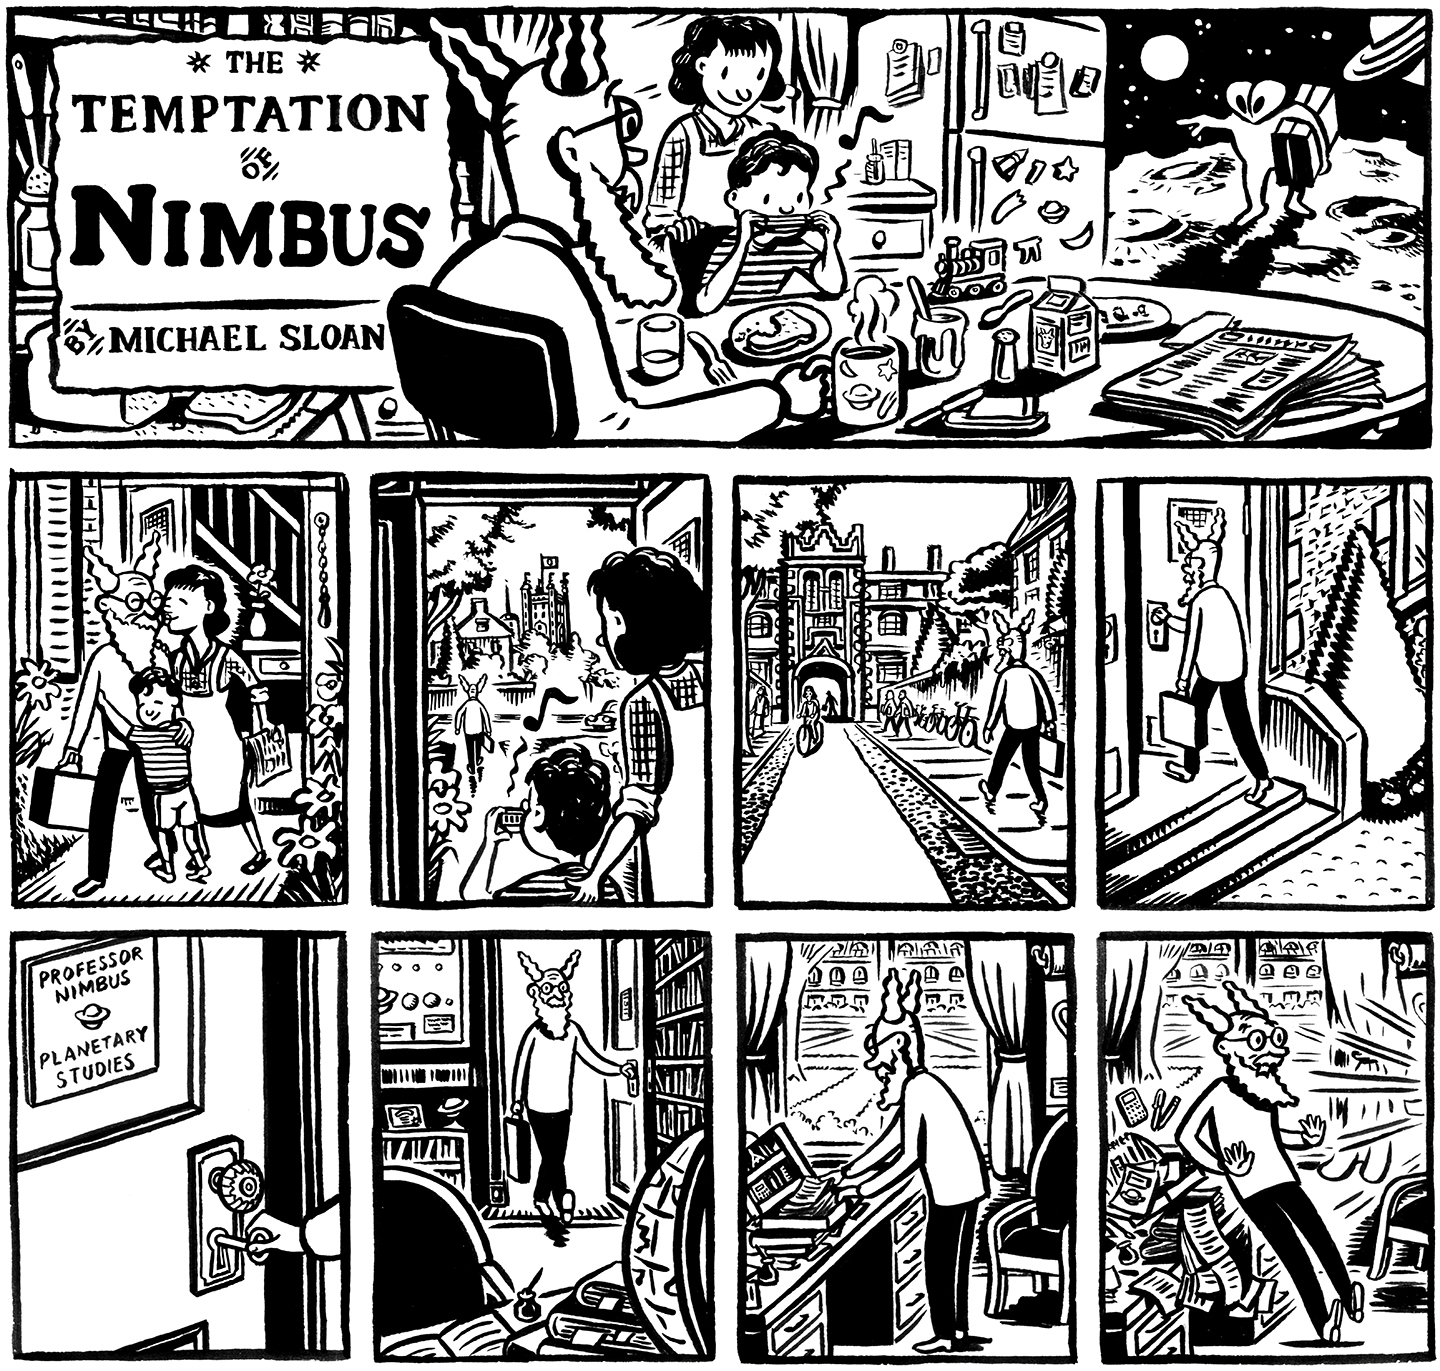 The Temptation of Nimbus, panels 1-9.